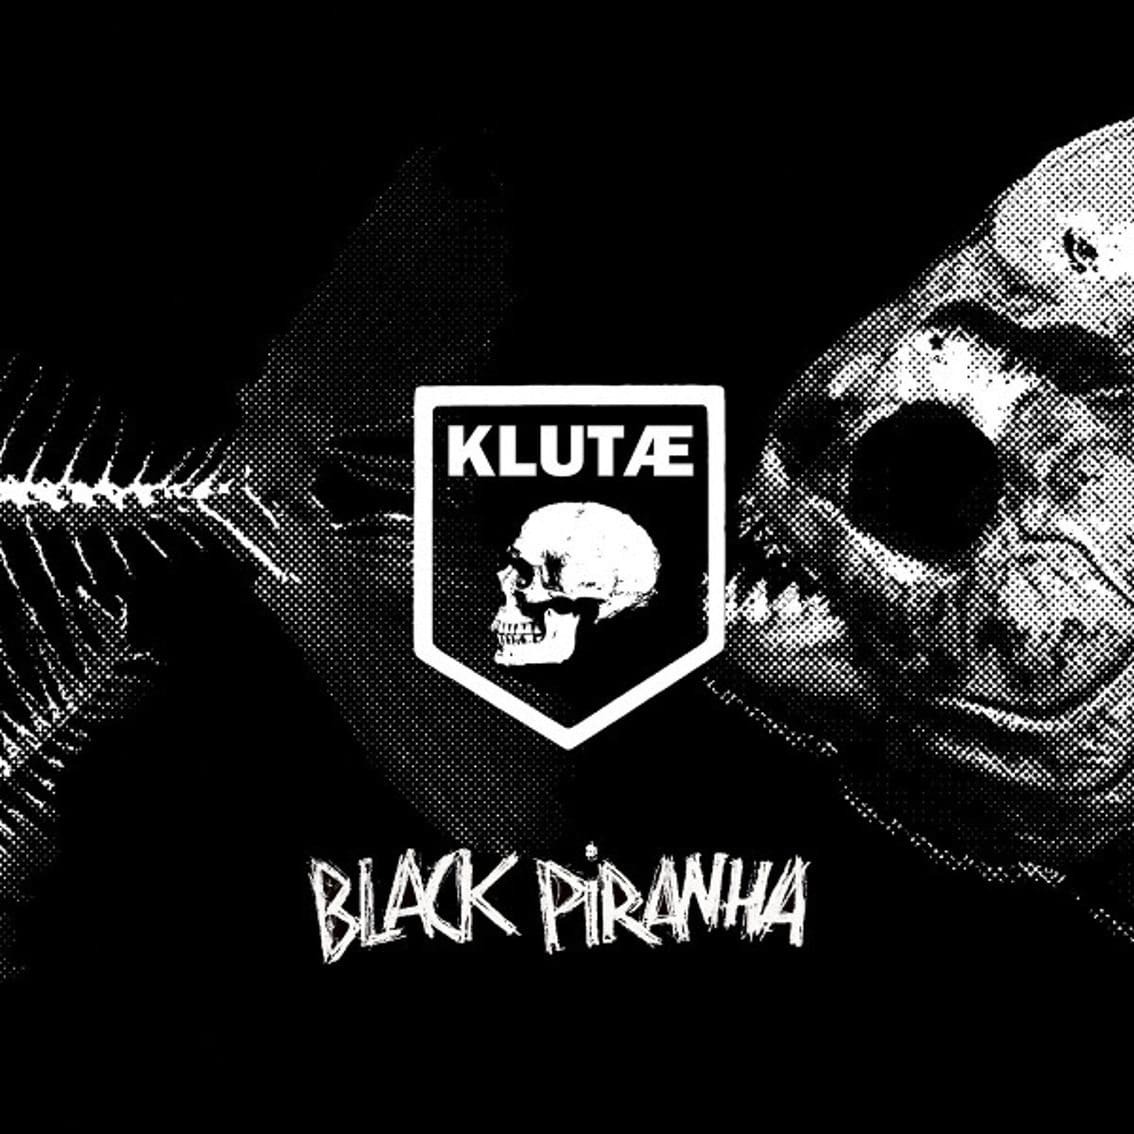 Klutae's'Black Piranha' album re-released on double vinyl including bonus tracks